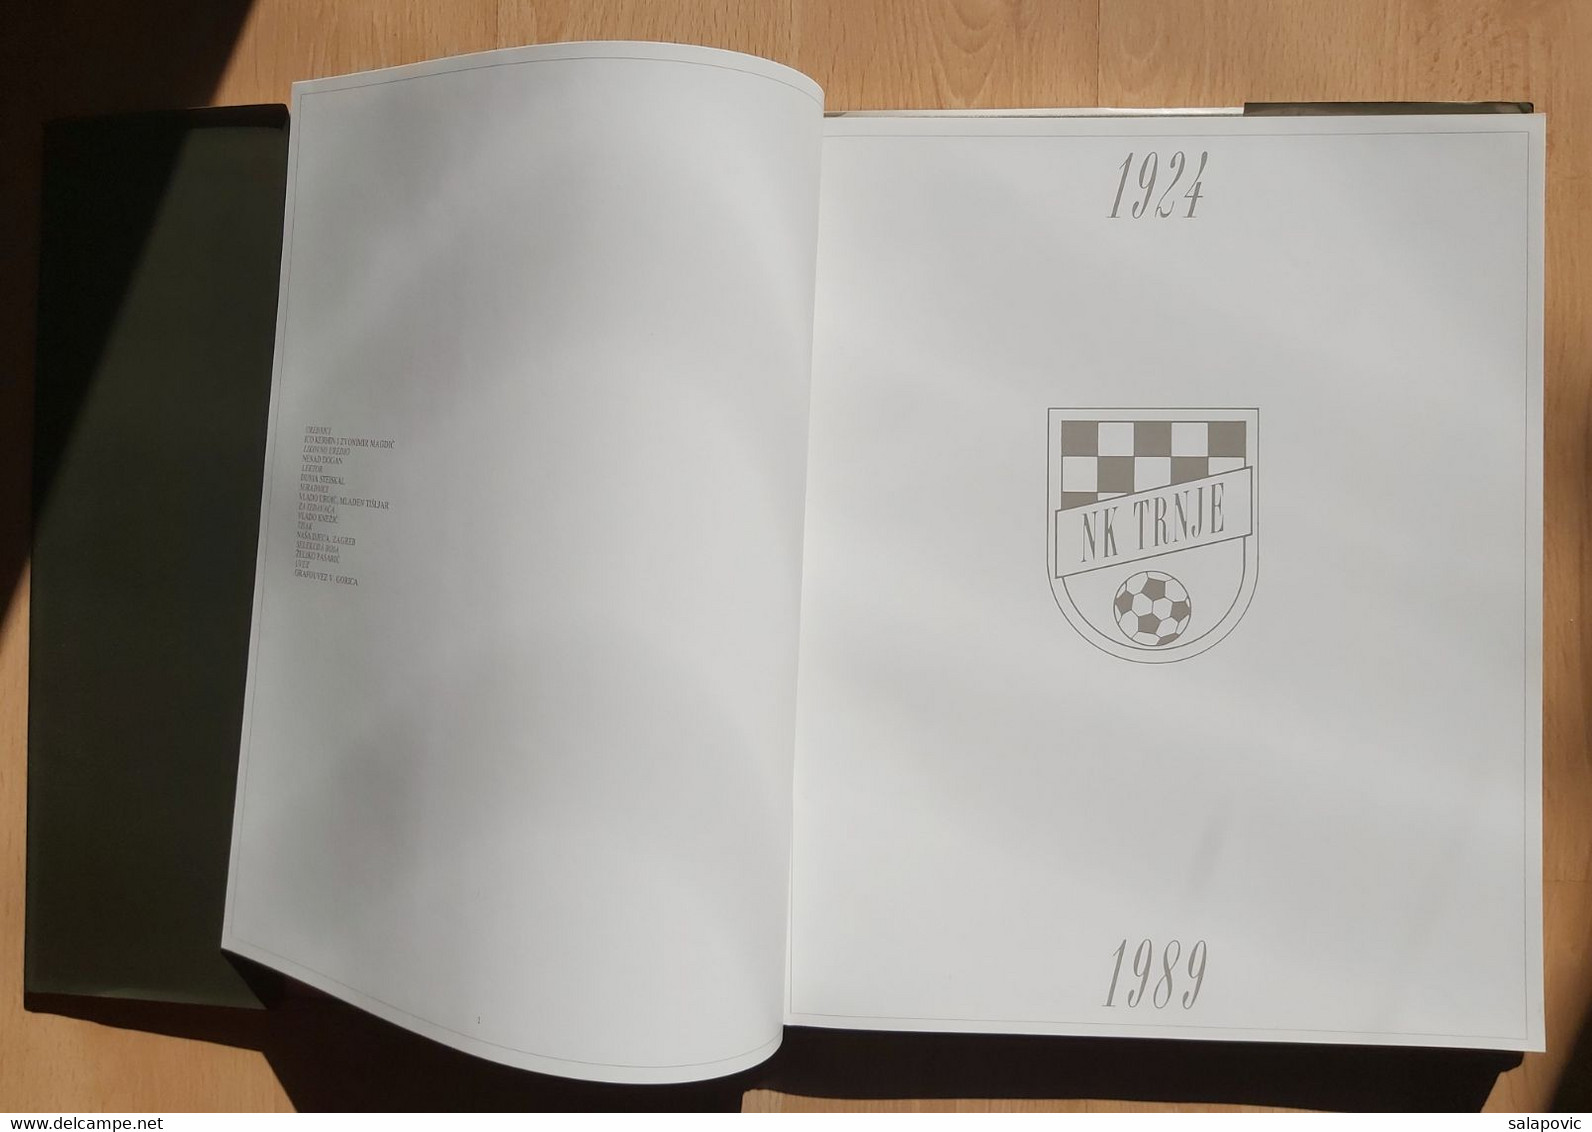 NK Trnje 1924-1989 Football Club, Croatia - Books